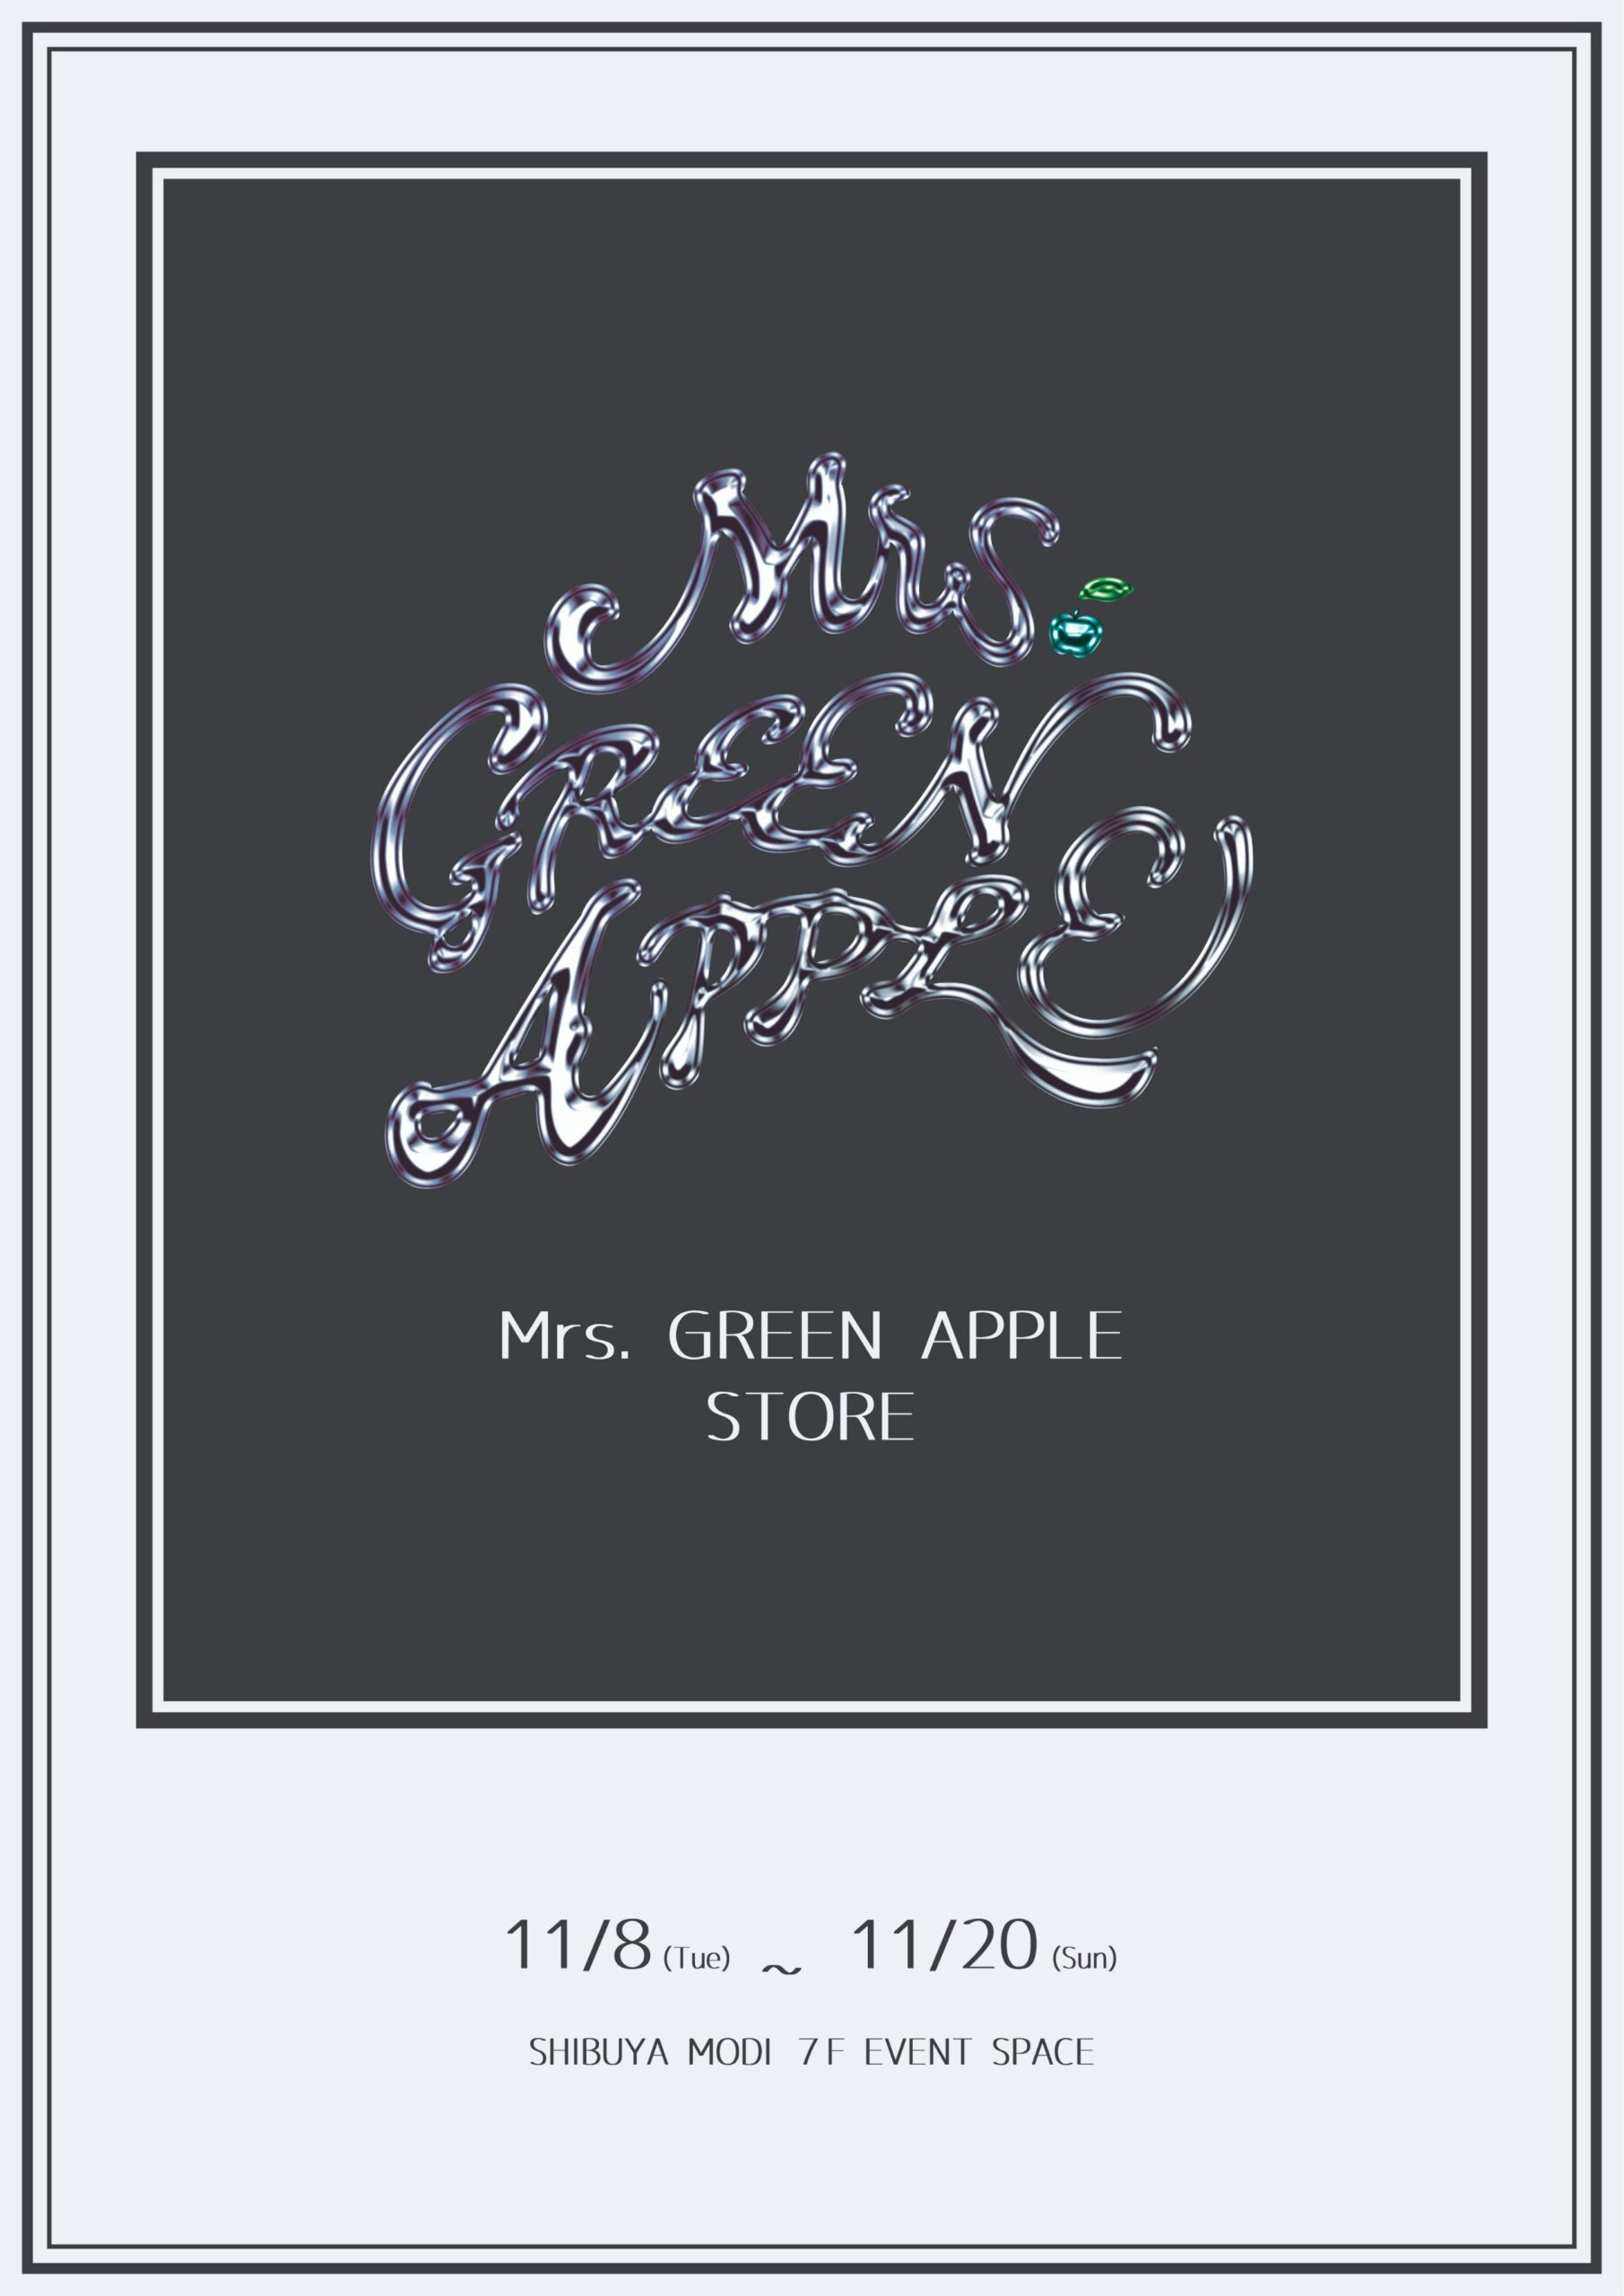 Mrs. GREEN APPLEポップアップストア in 渋谷 11月8日より開催!